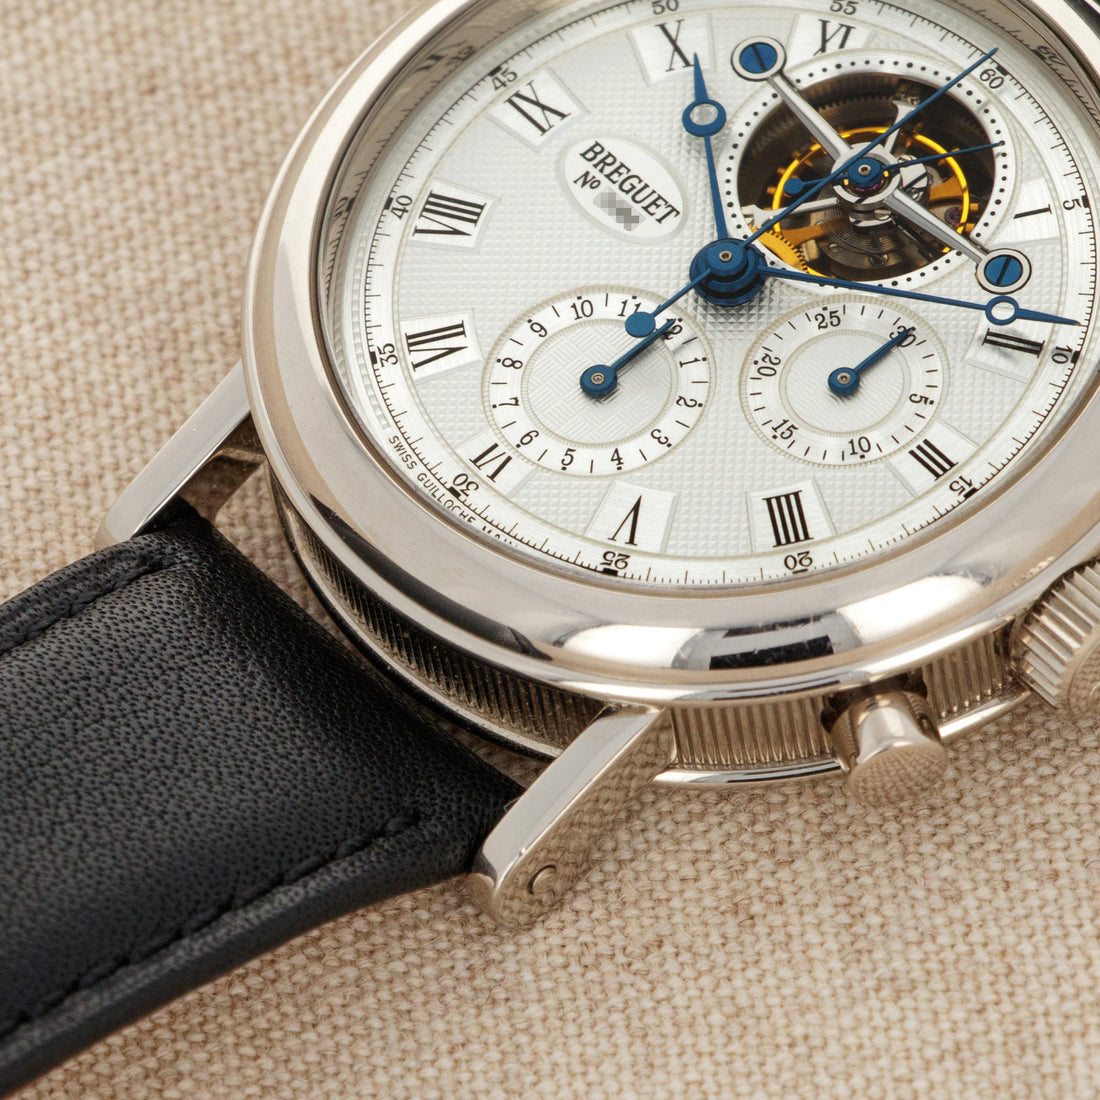 Breguet White Gold Chronograph Tourbillon Watch Ref. 3577